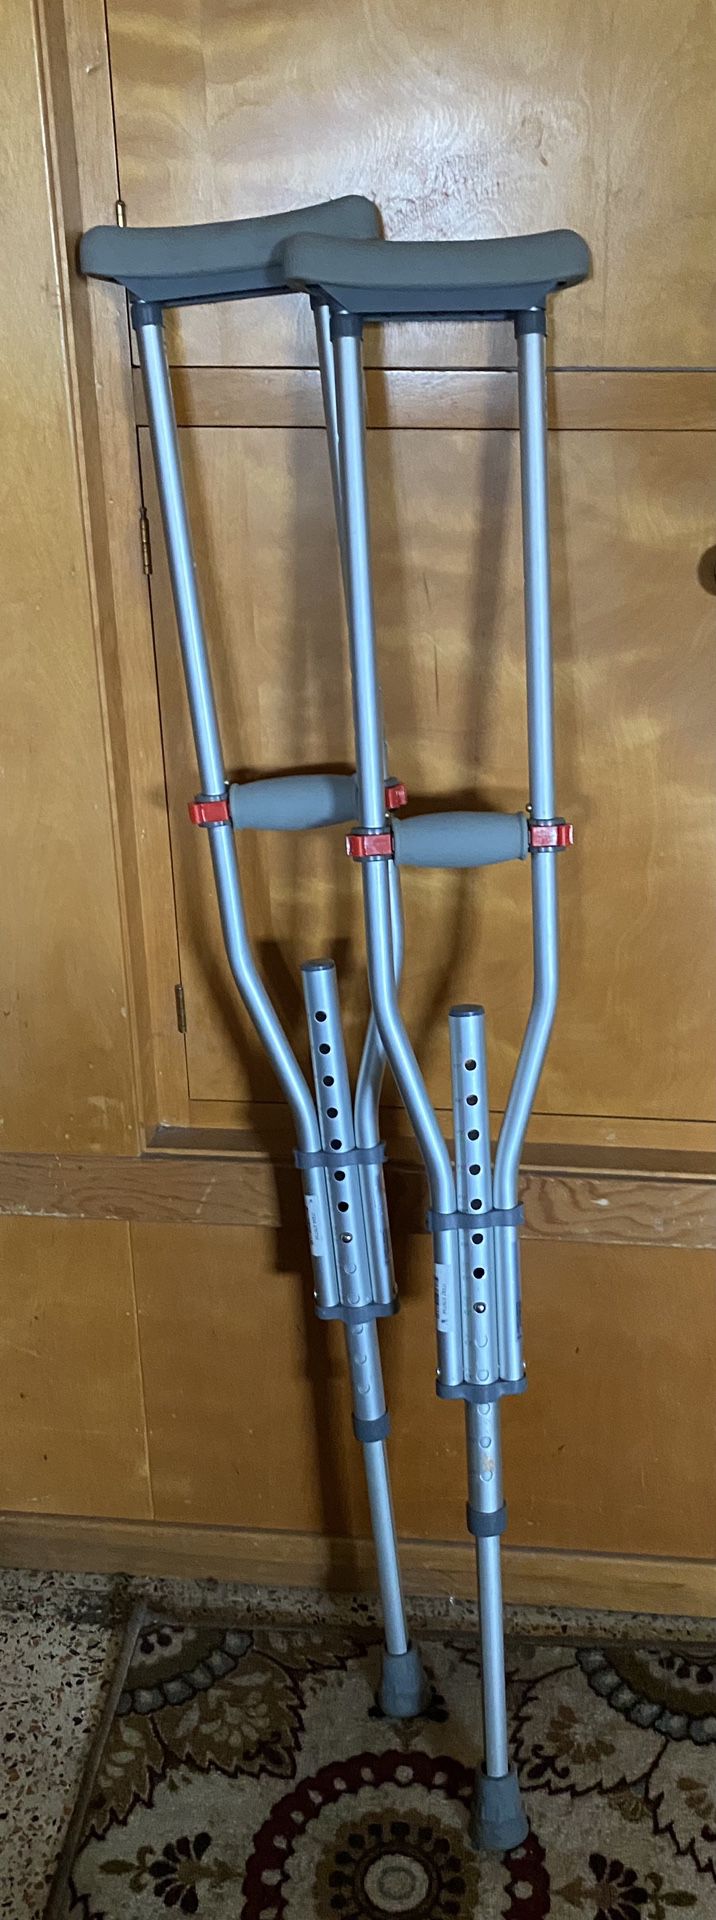 FREE - Crutches (Medical Use)